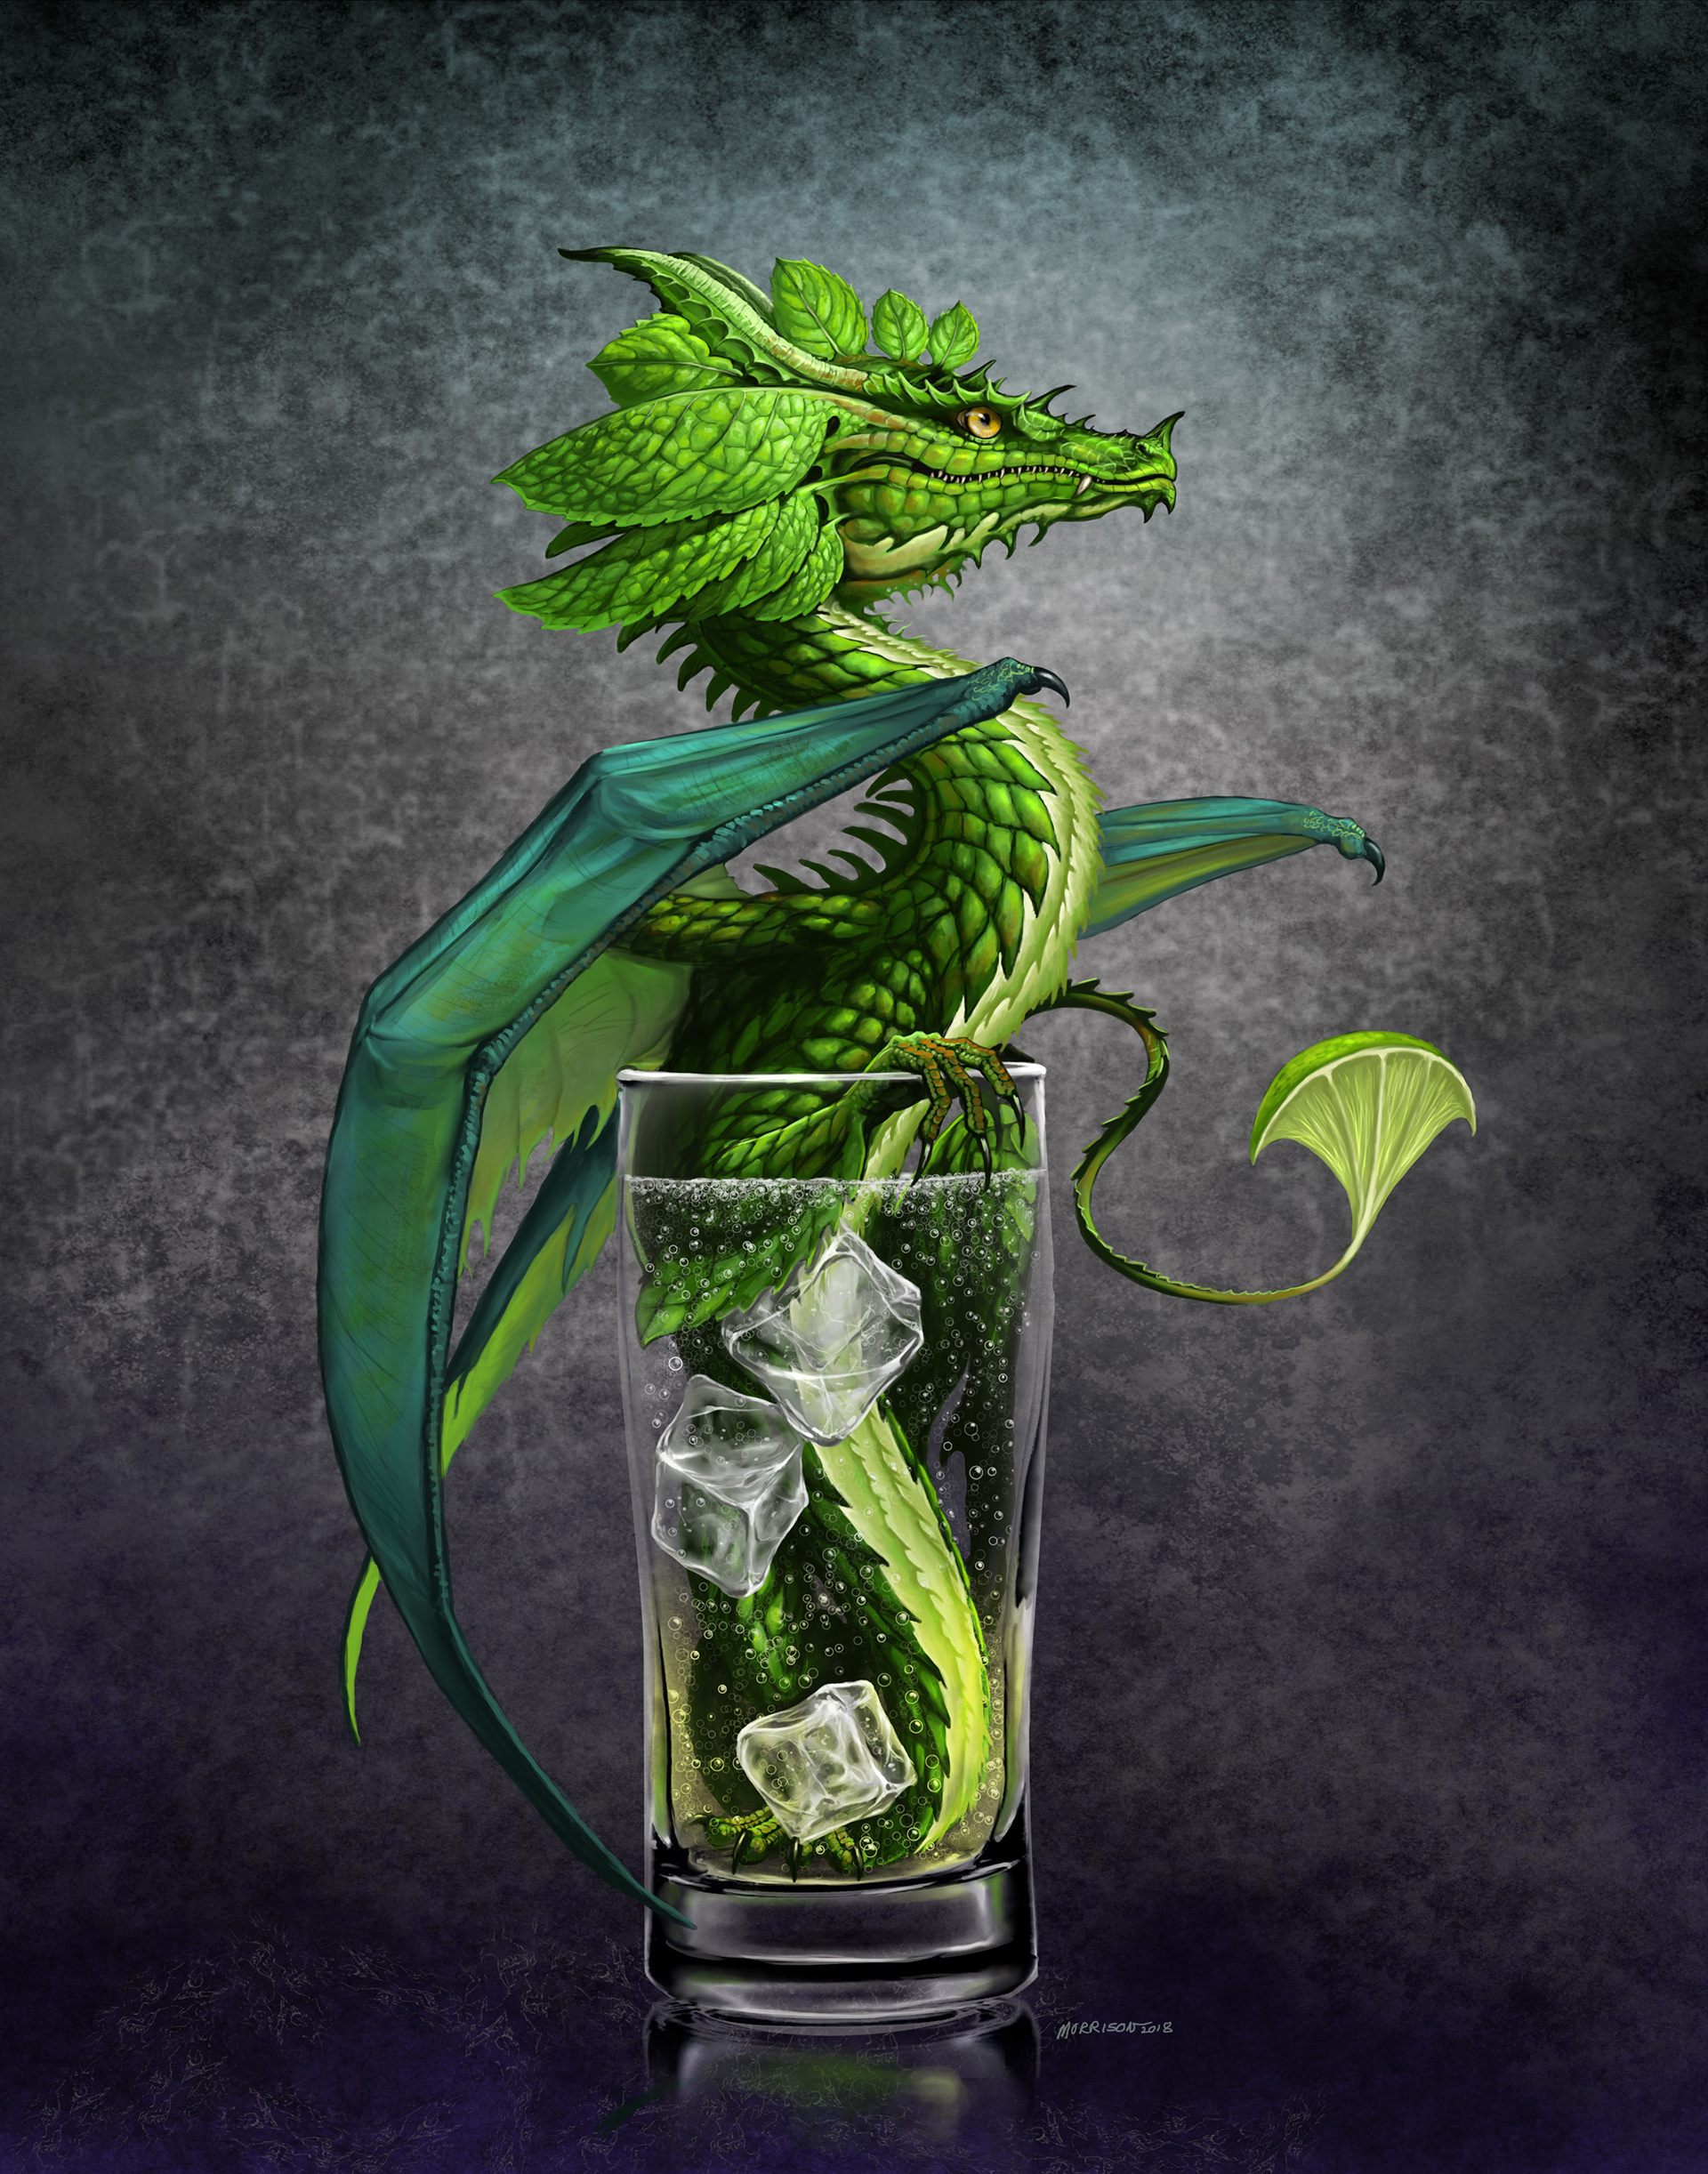 Mead Dragon, by Stanley Morrison